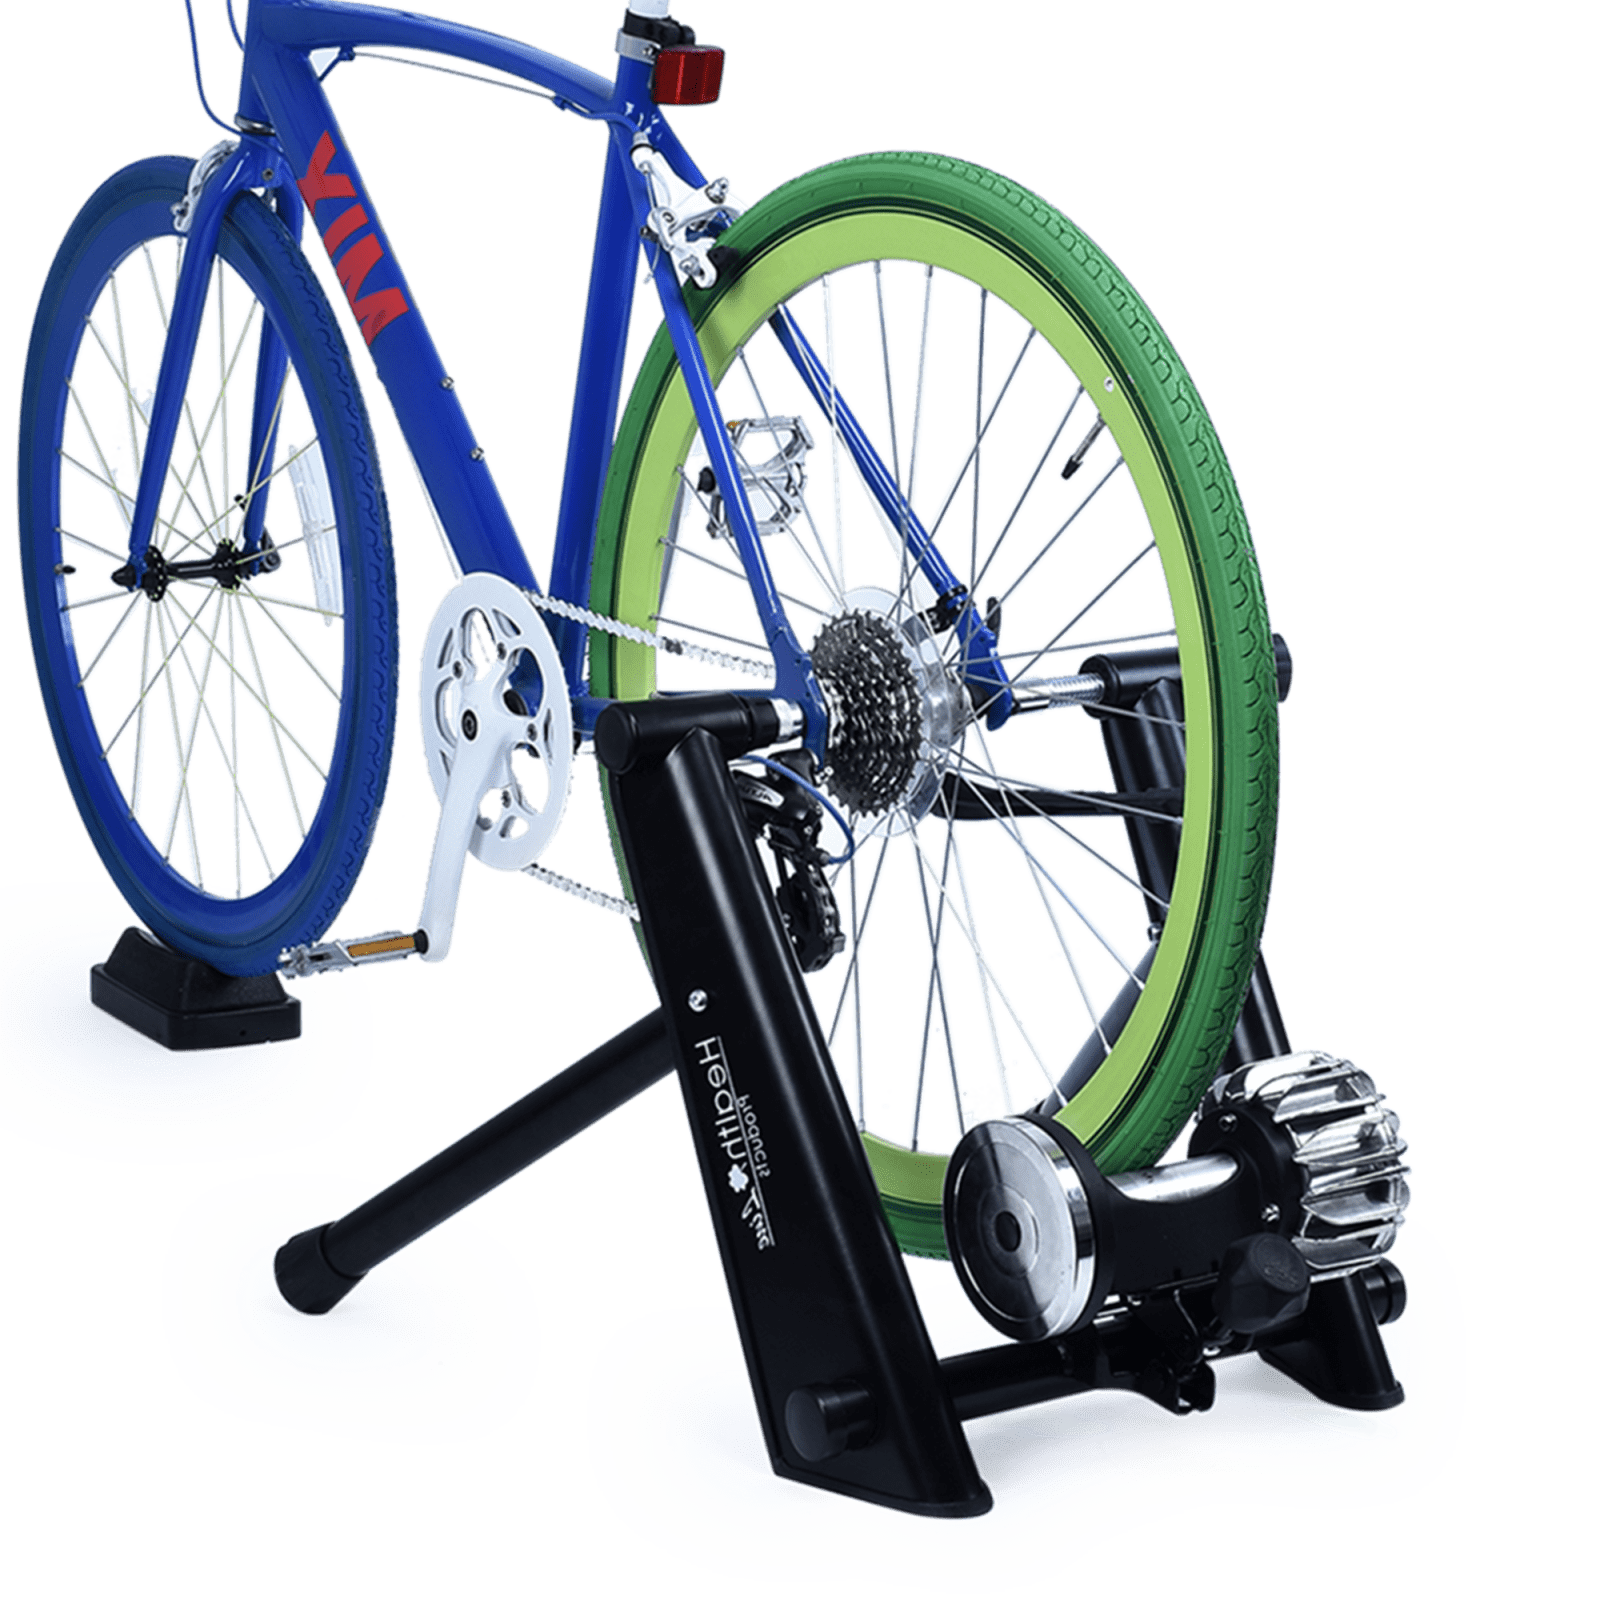 raleigh indoor bicycle trainer